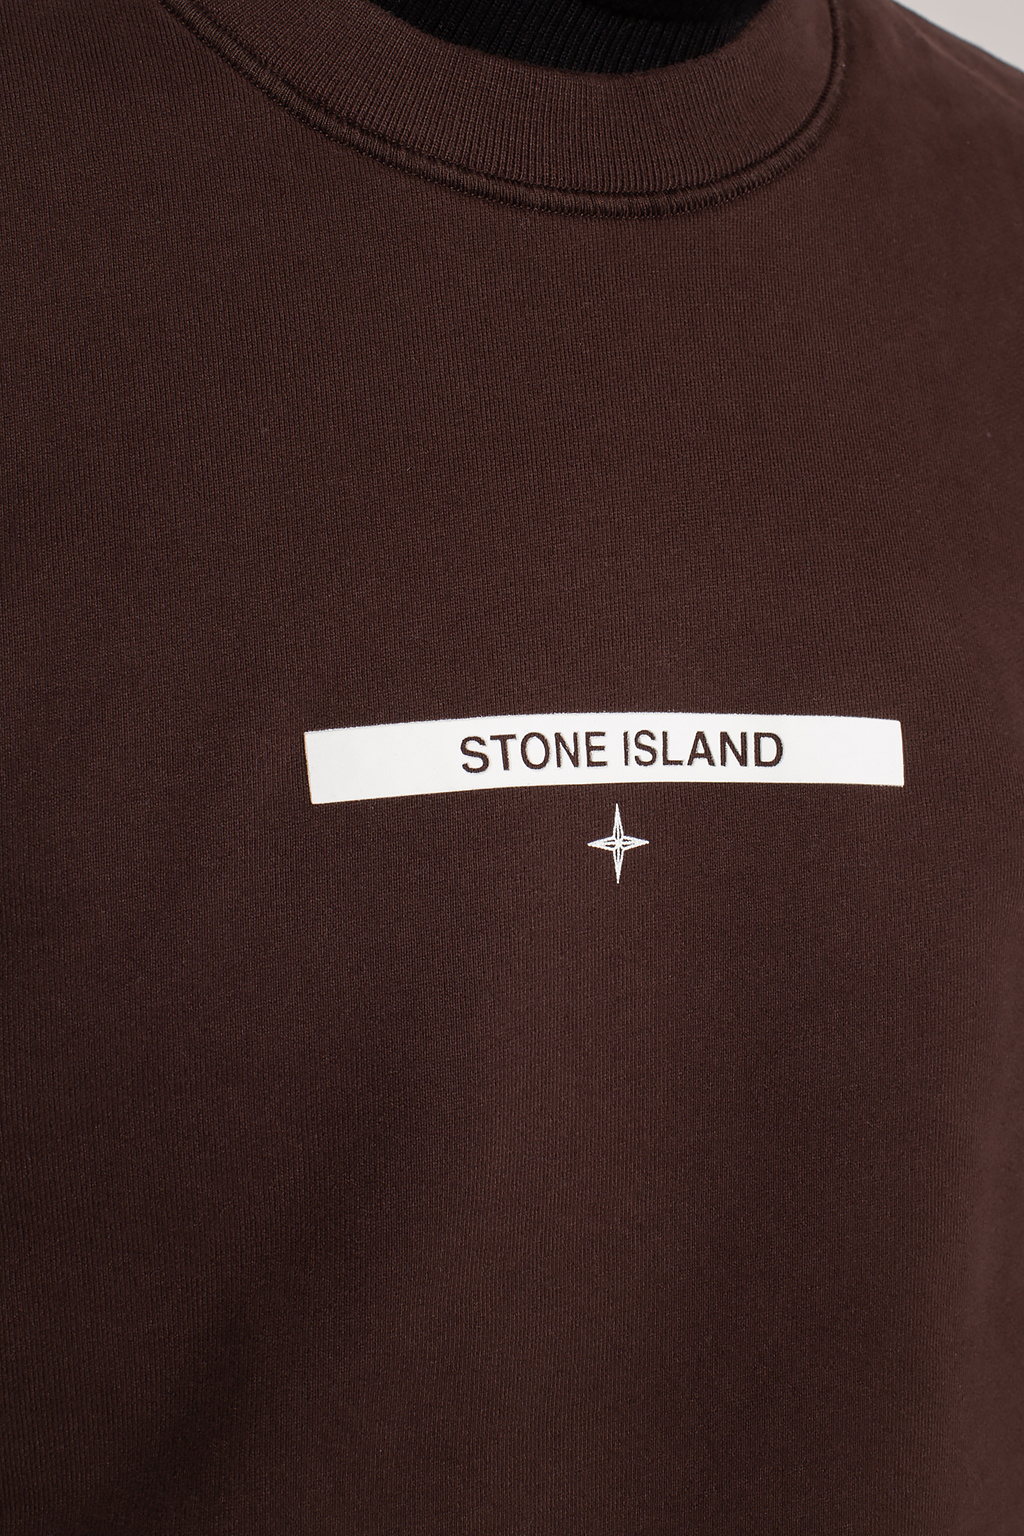 Stone Island perks and mini pam ma 1 flight jacket